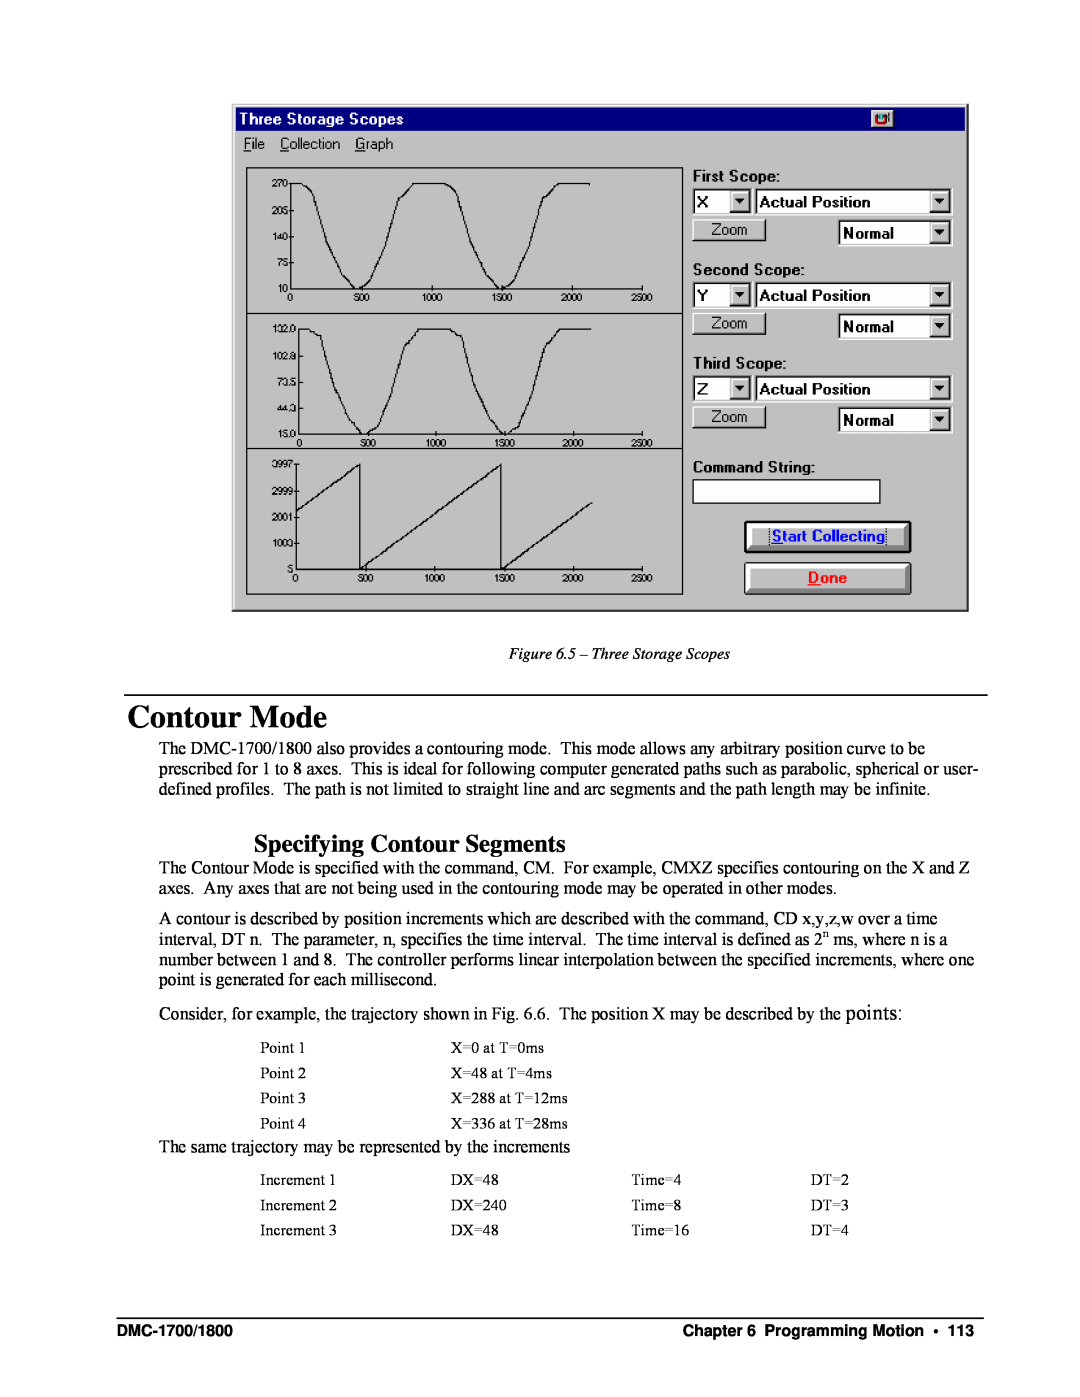 Galil DMC-1700, DMC-1800 user manual Contour Mode, Specifying Contour Segments 